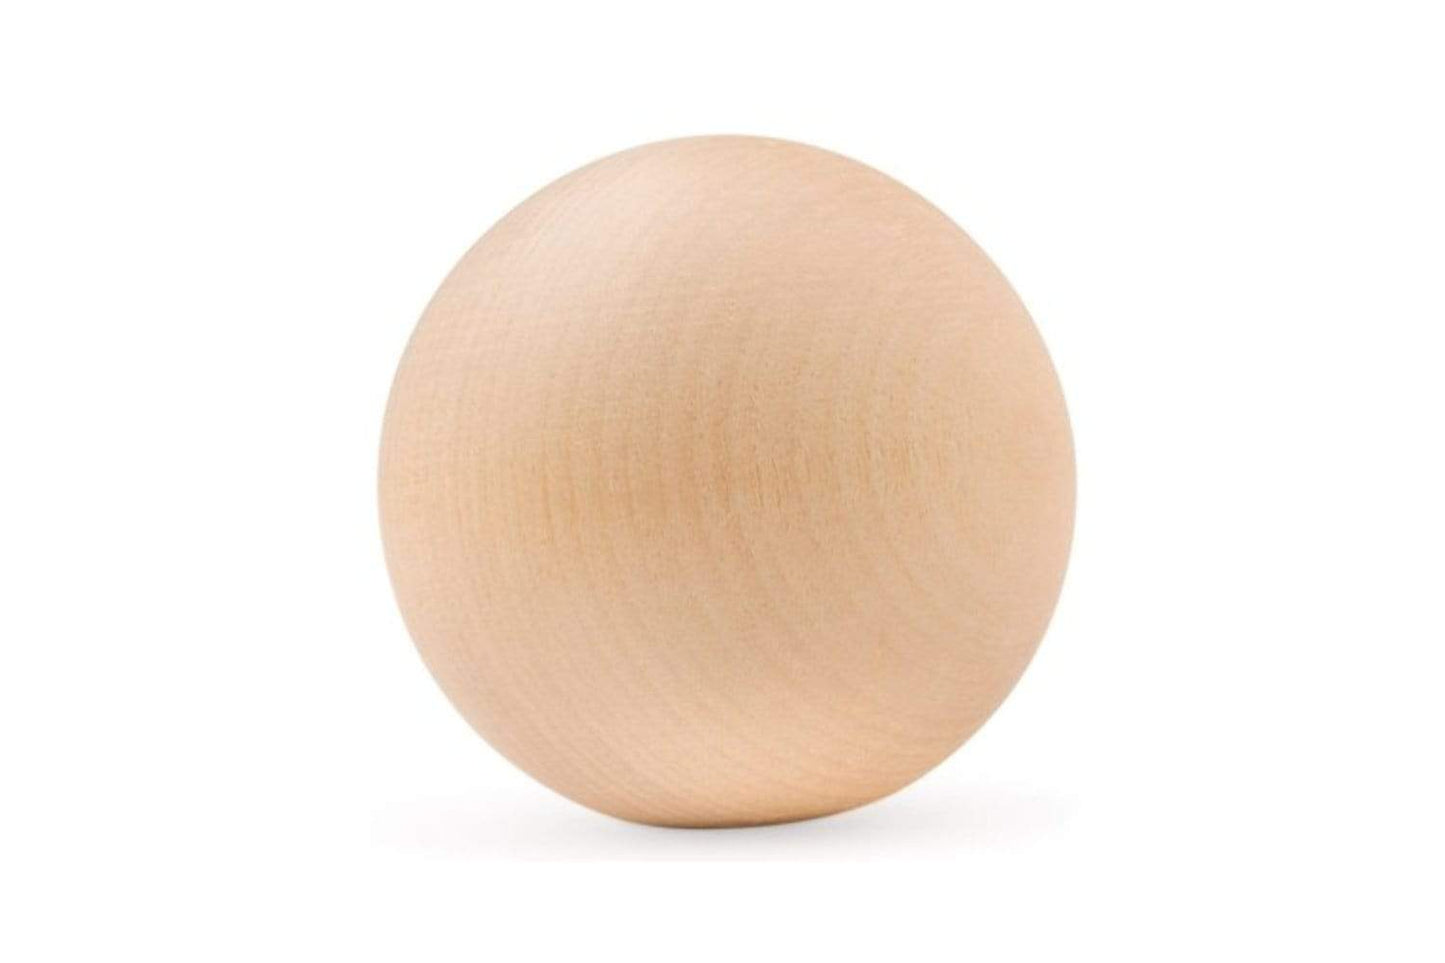 Arbor Scientific 1 inch Wooden Ball